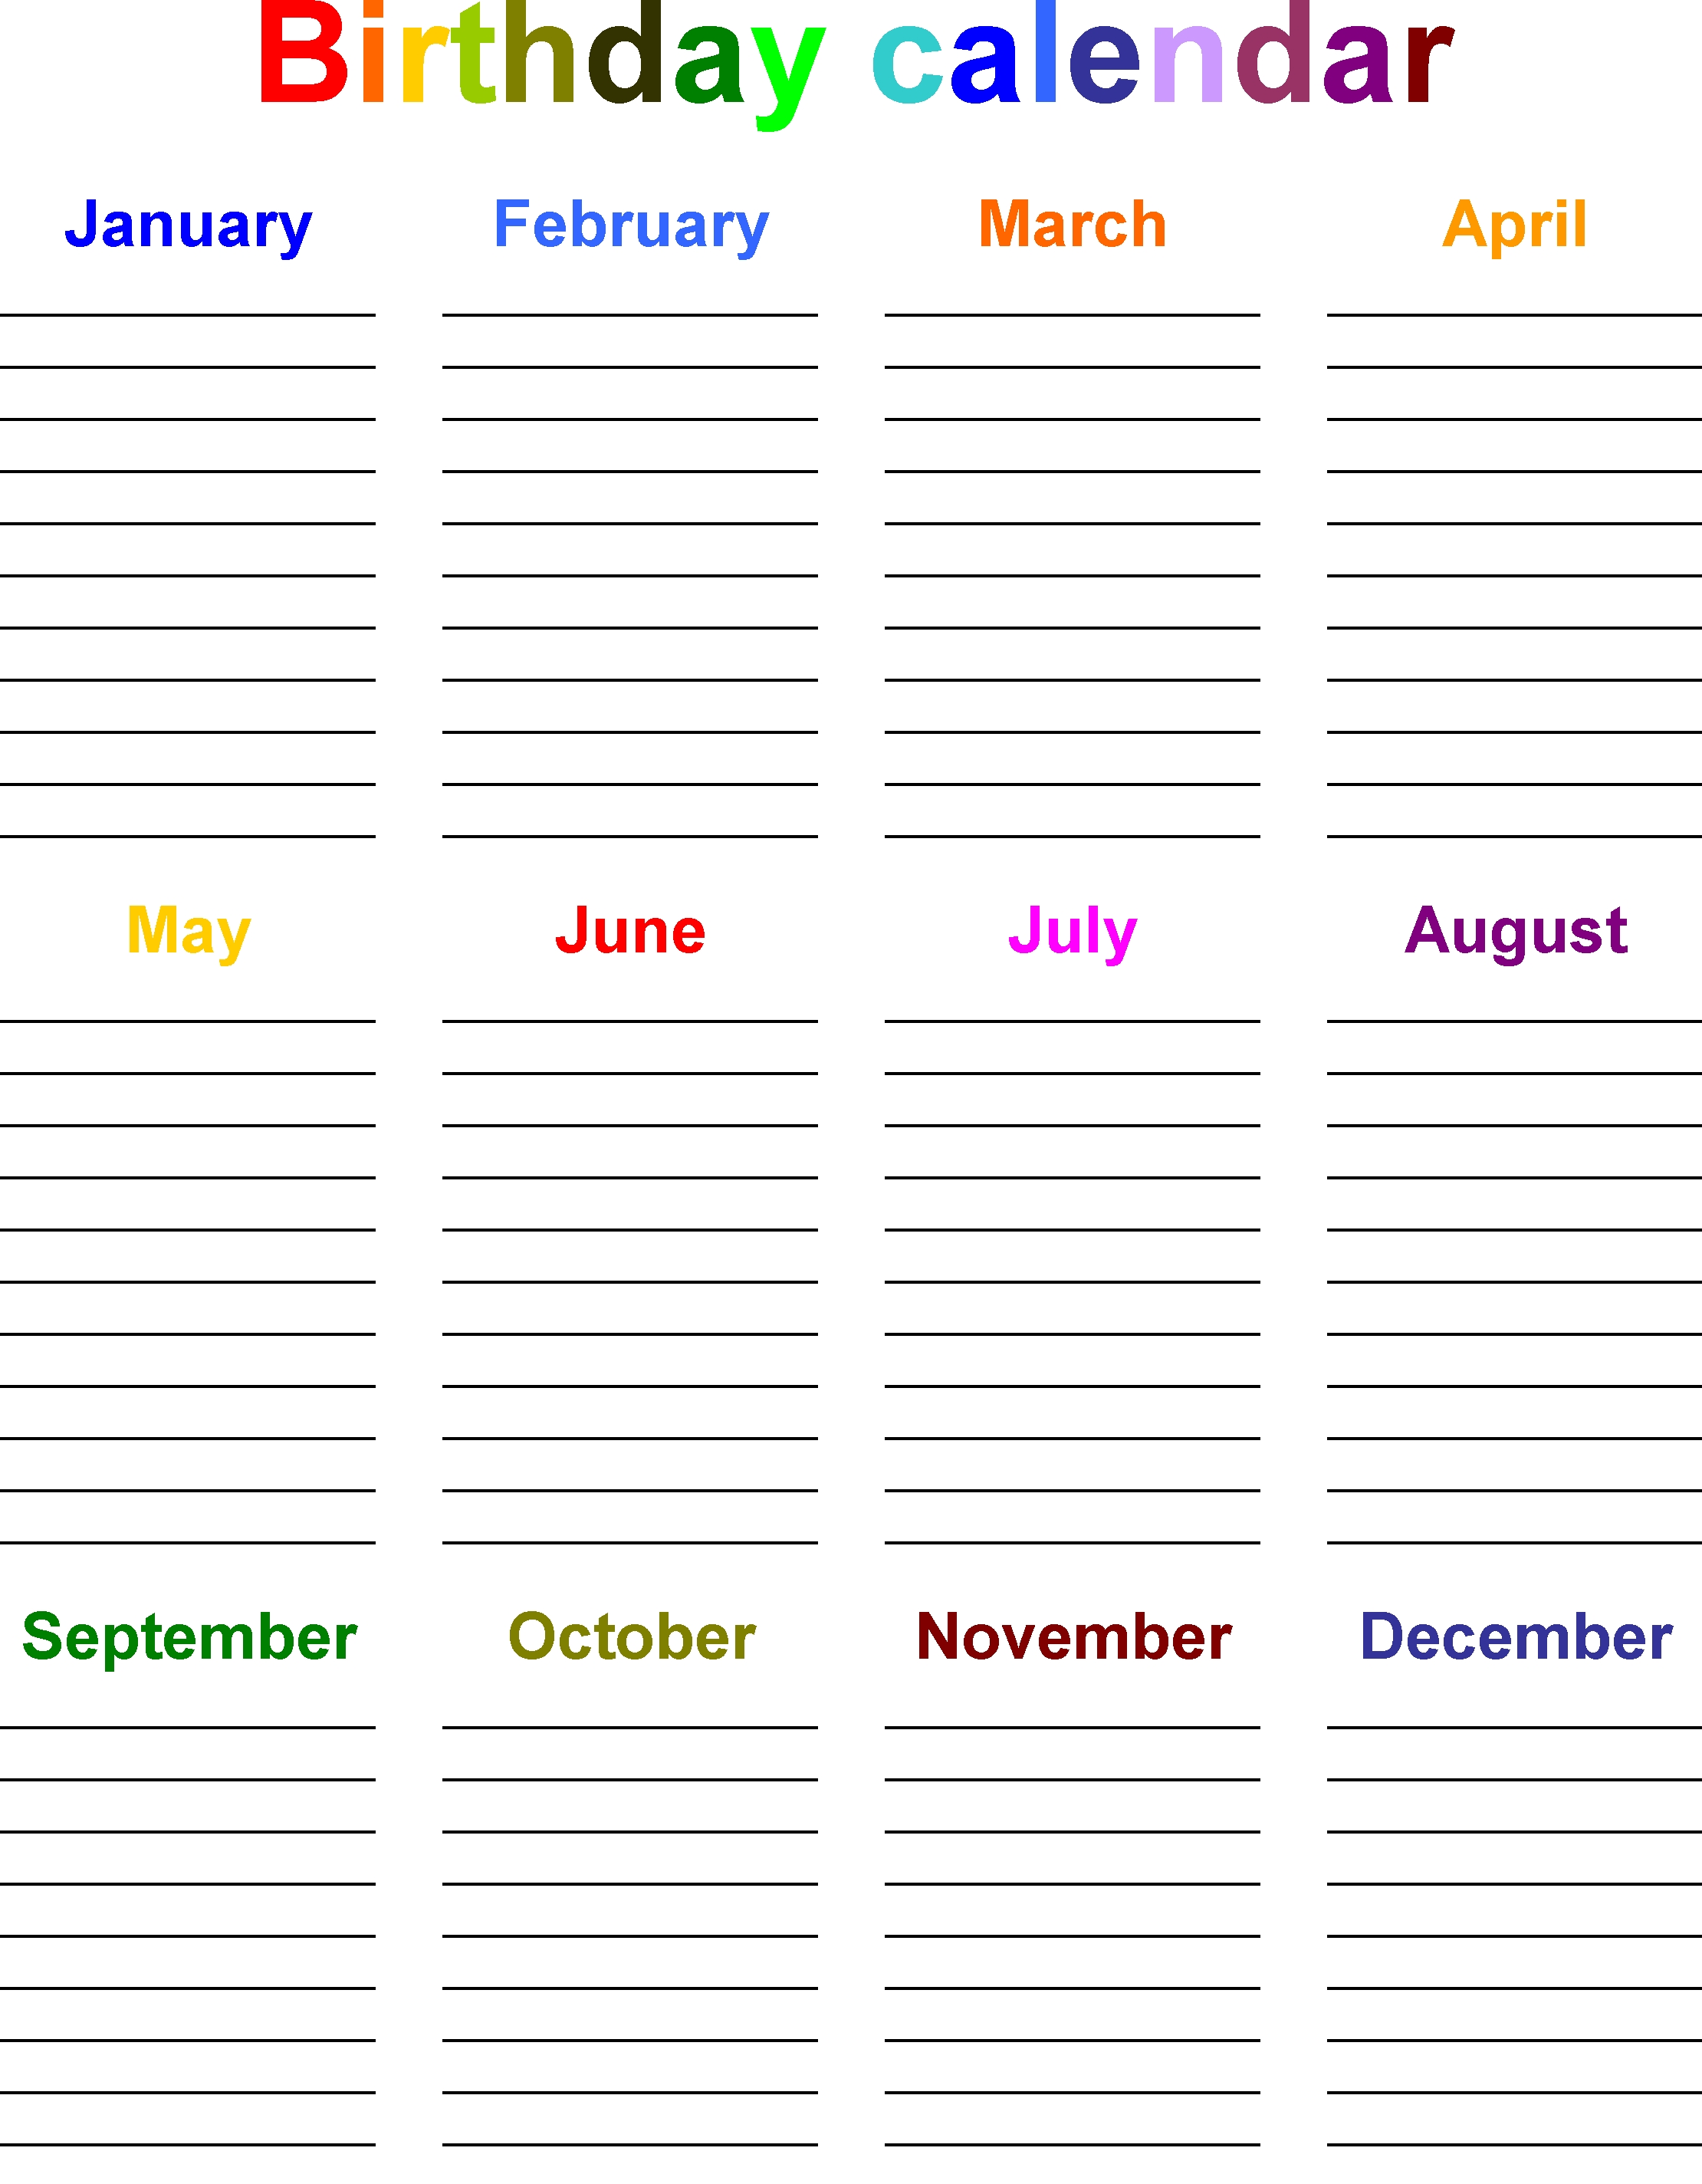 Birthday Calendar Template Free Microsoft Word | Calendar